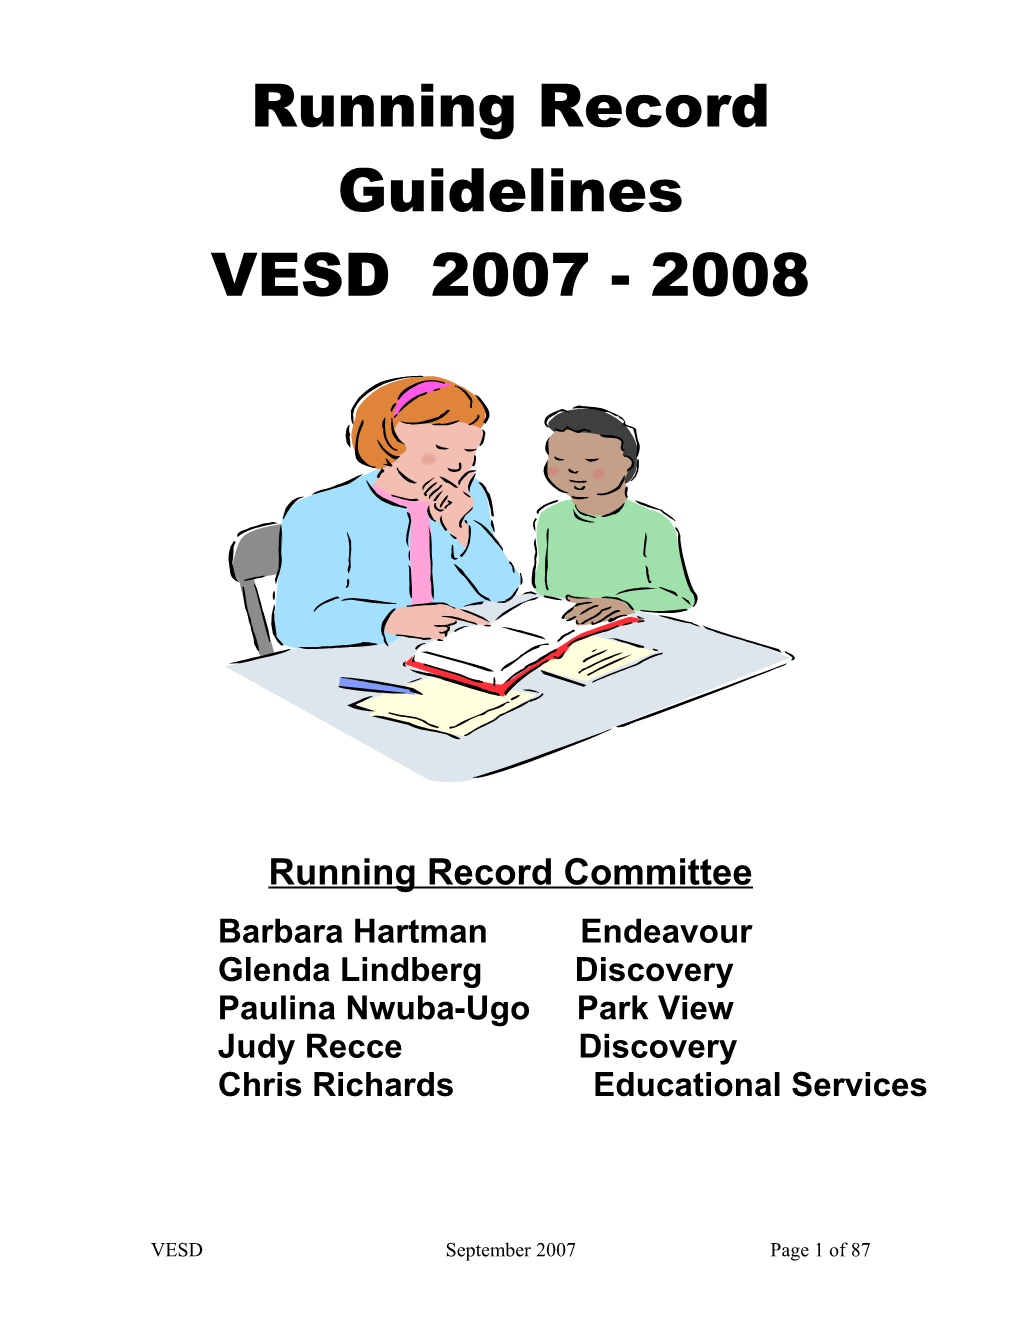 Running Record Committee